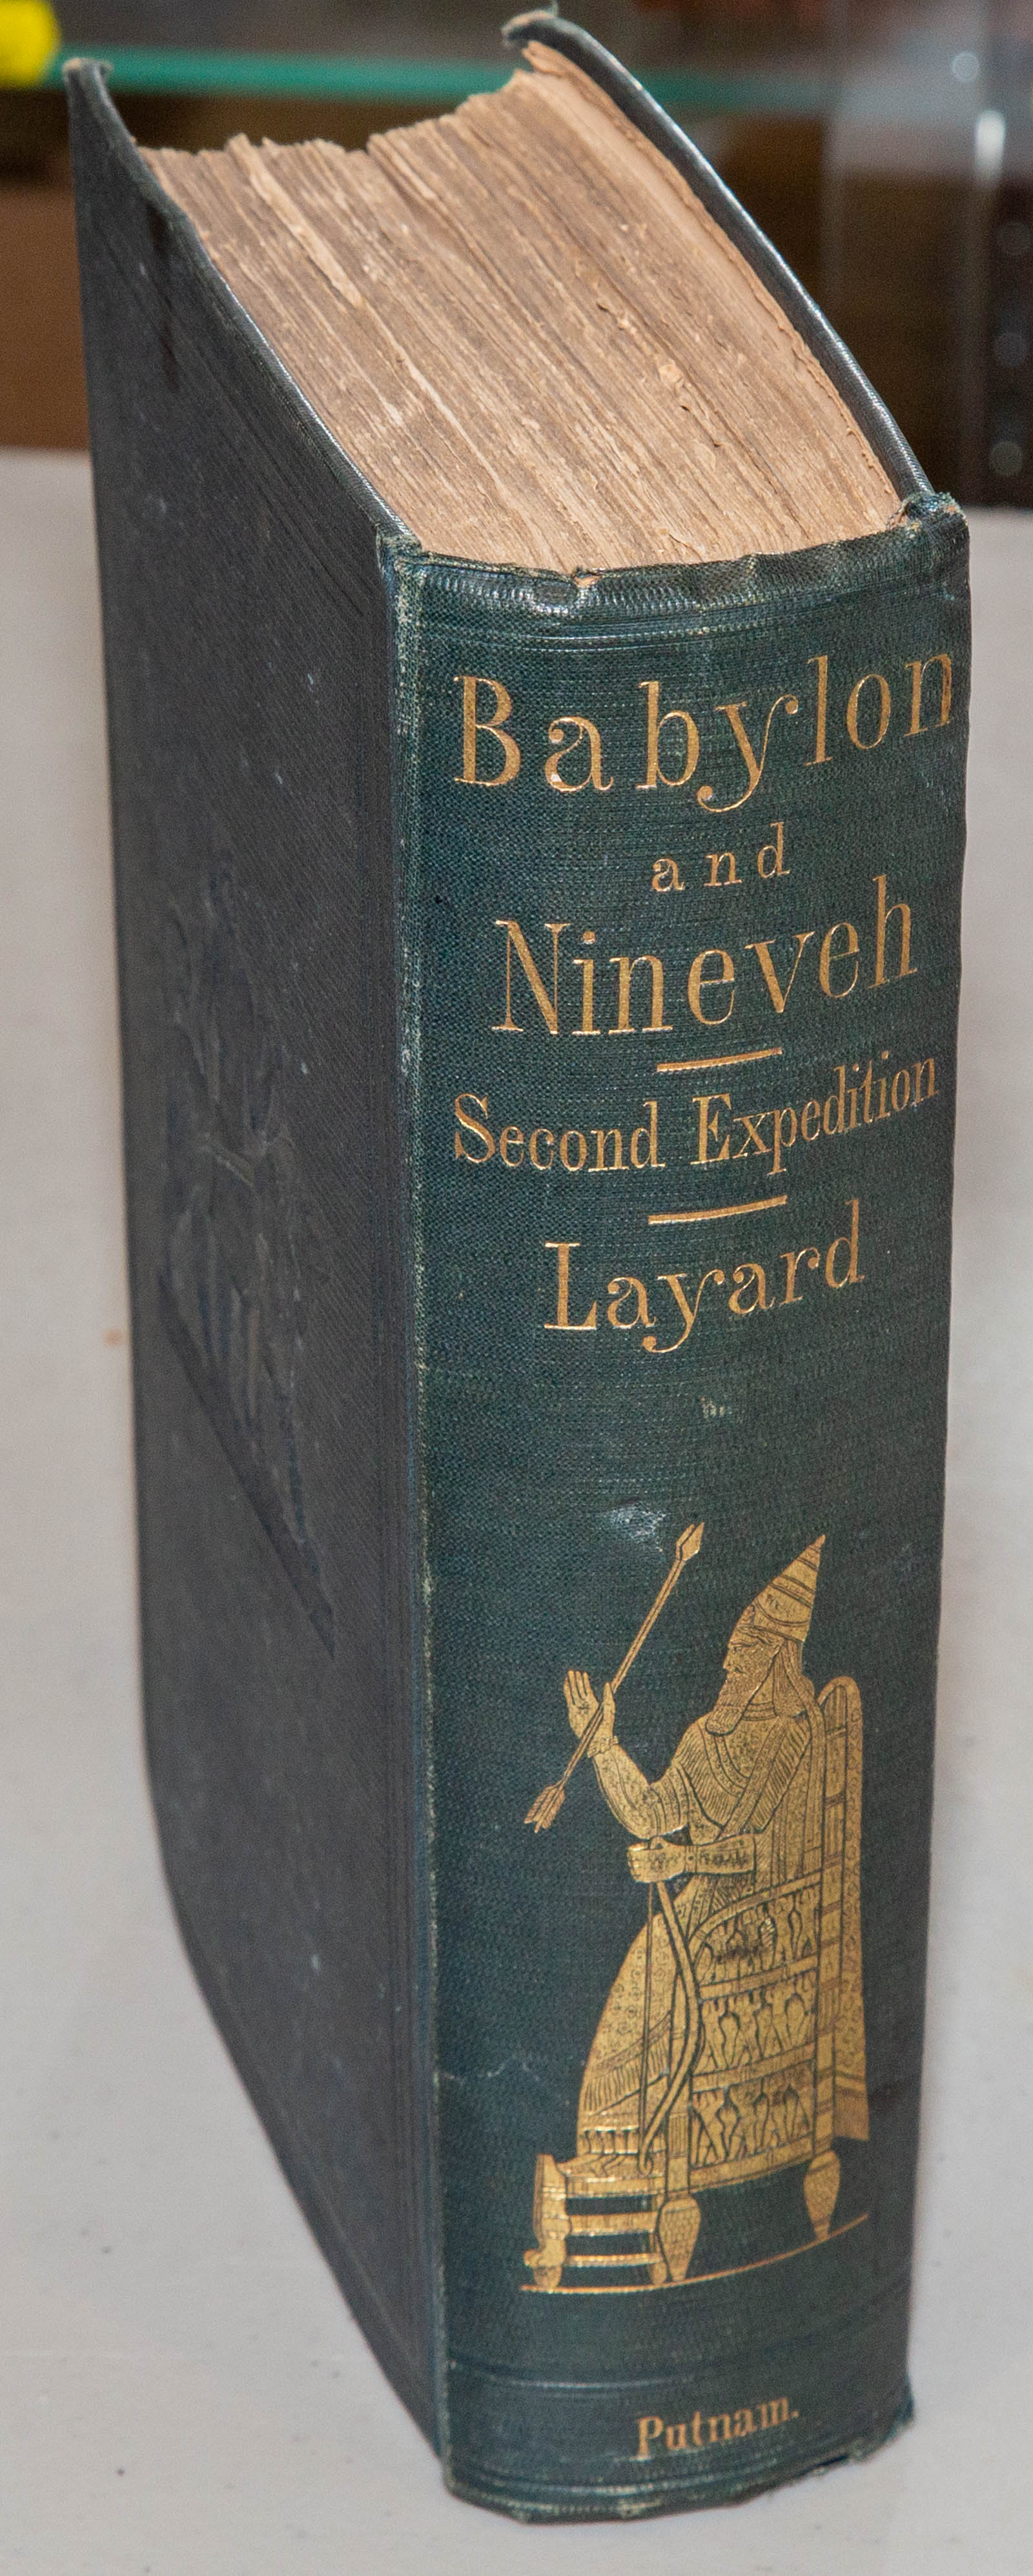 LAYARD, BABYLON AND NINEVEH, SECOND